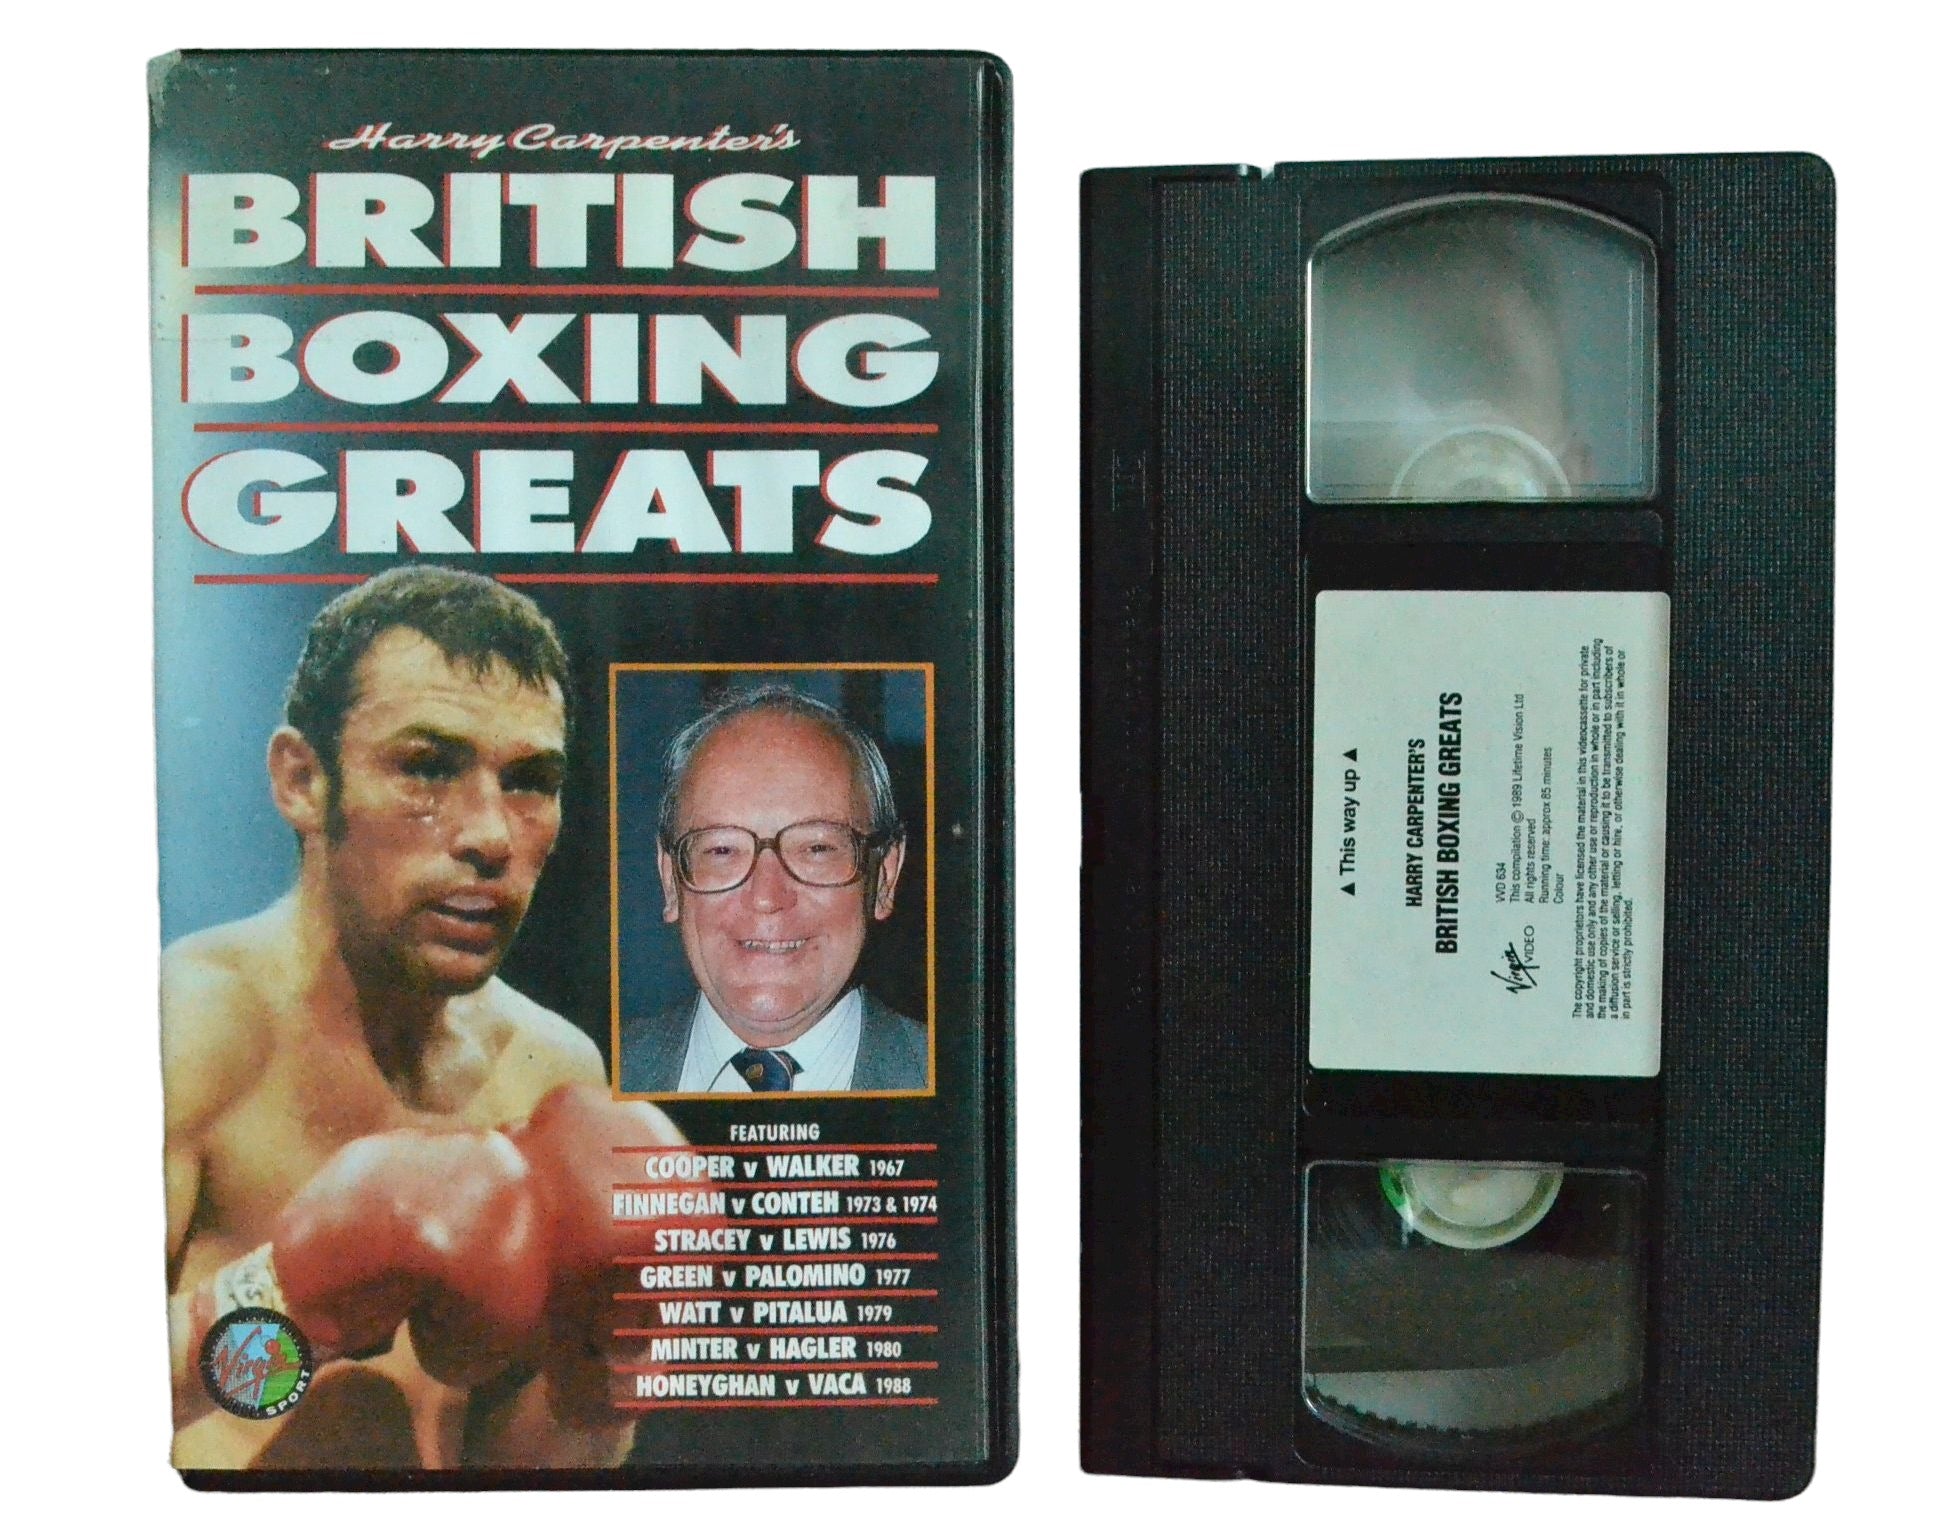 British Boxing Greats - Henry Cooper - Virgin Video - Boxing - Pal VHS  5013702363422 – Golden Class Movies LTD